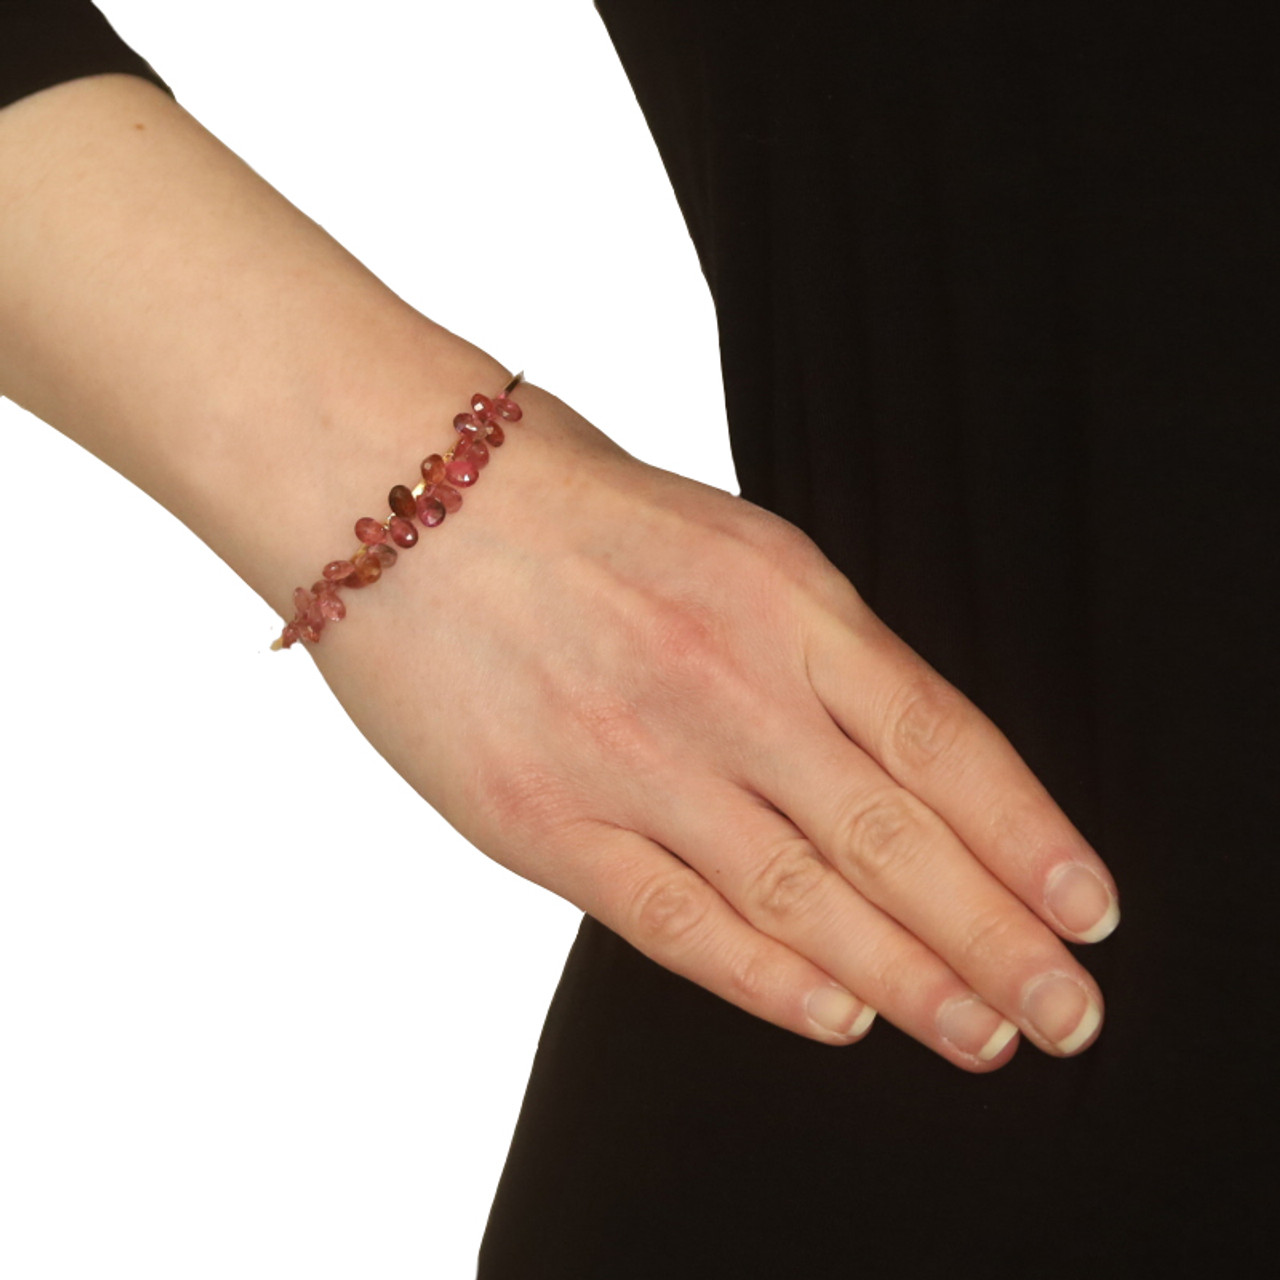 Red Rose Bracelet Flowers Wrist Chain Charm Valentine's Day Gift for Women  | eBay